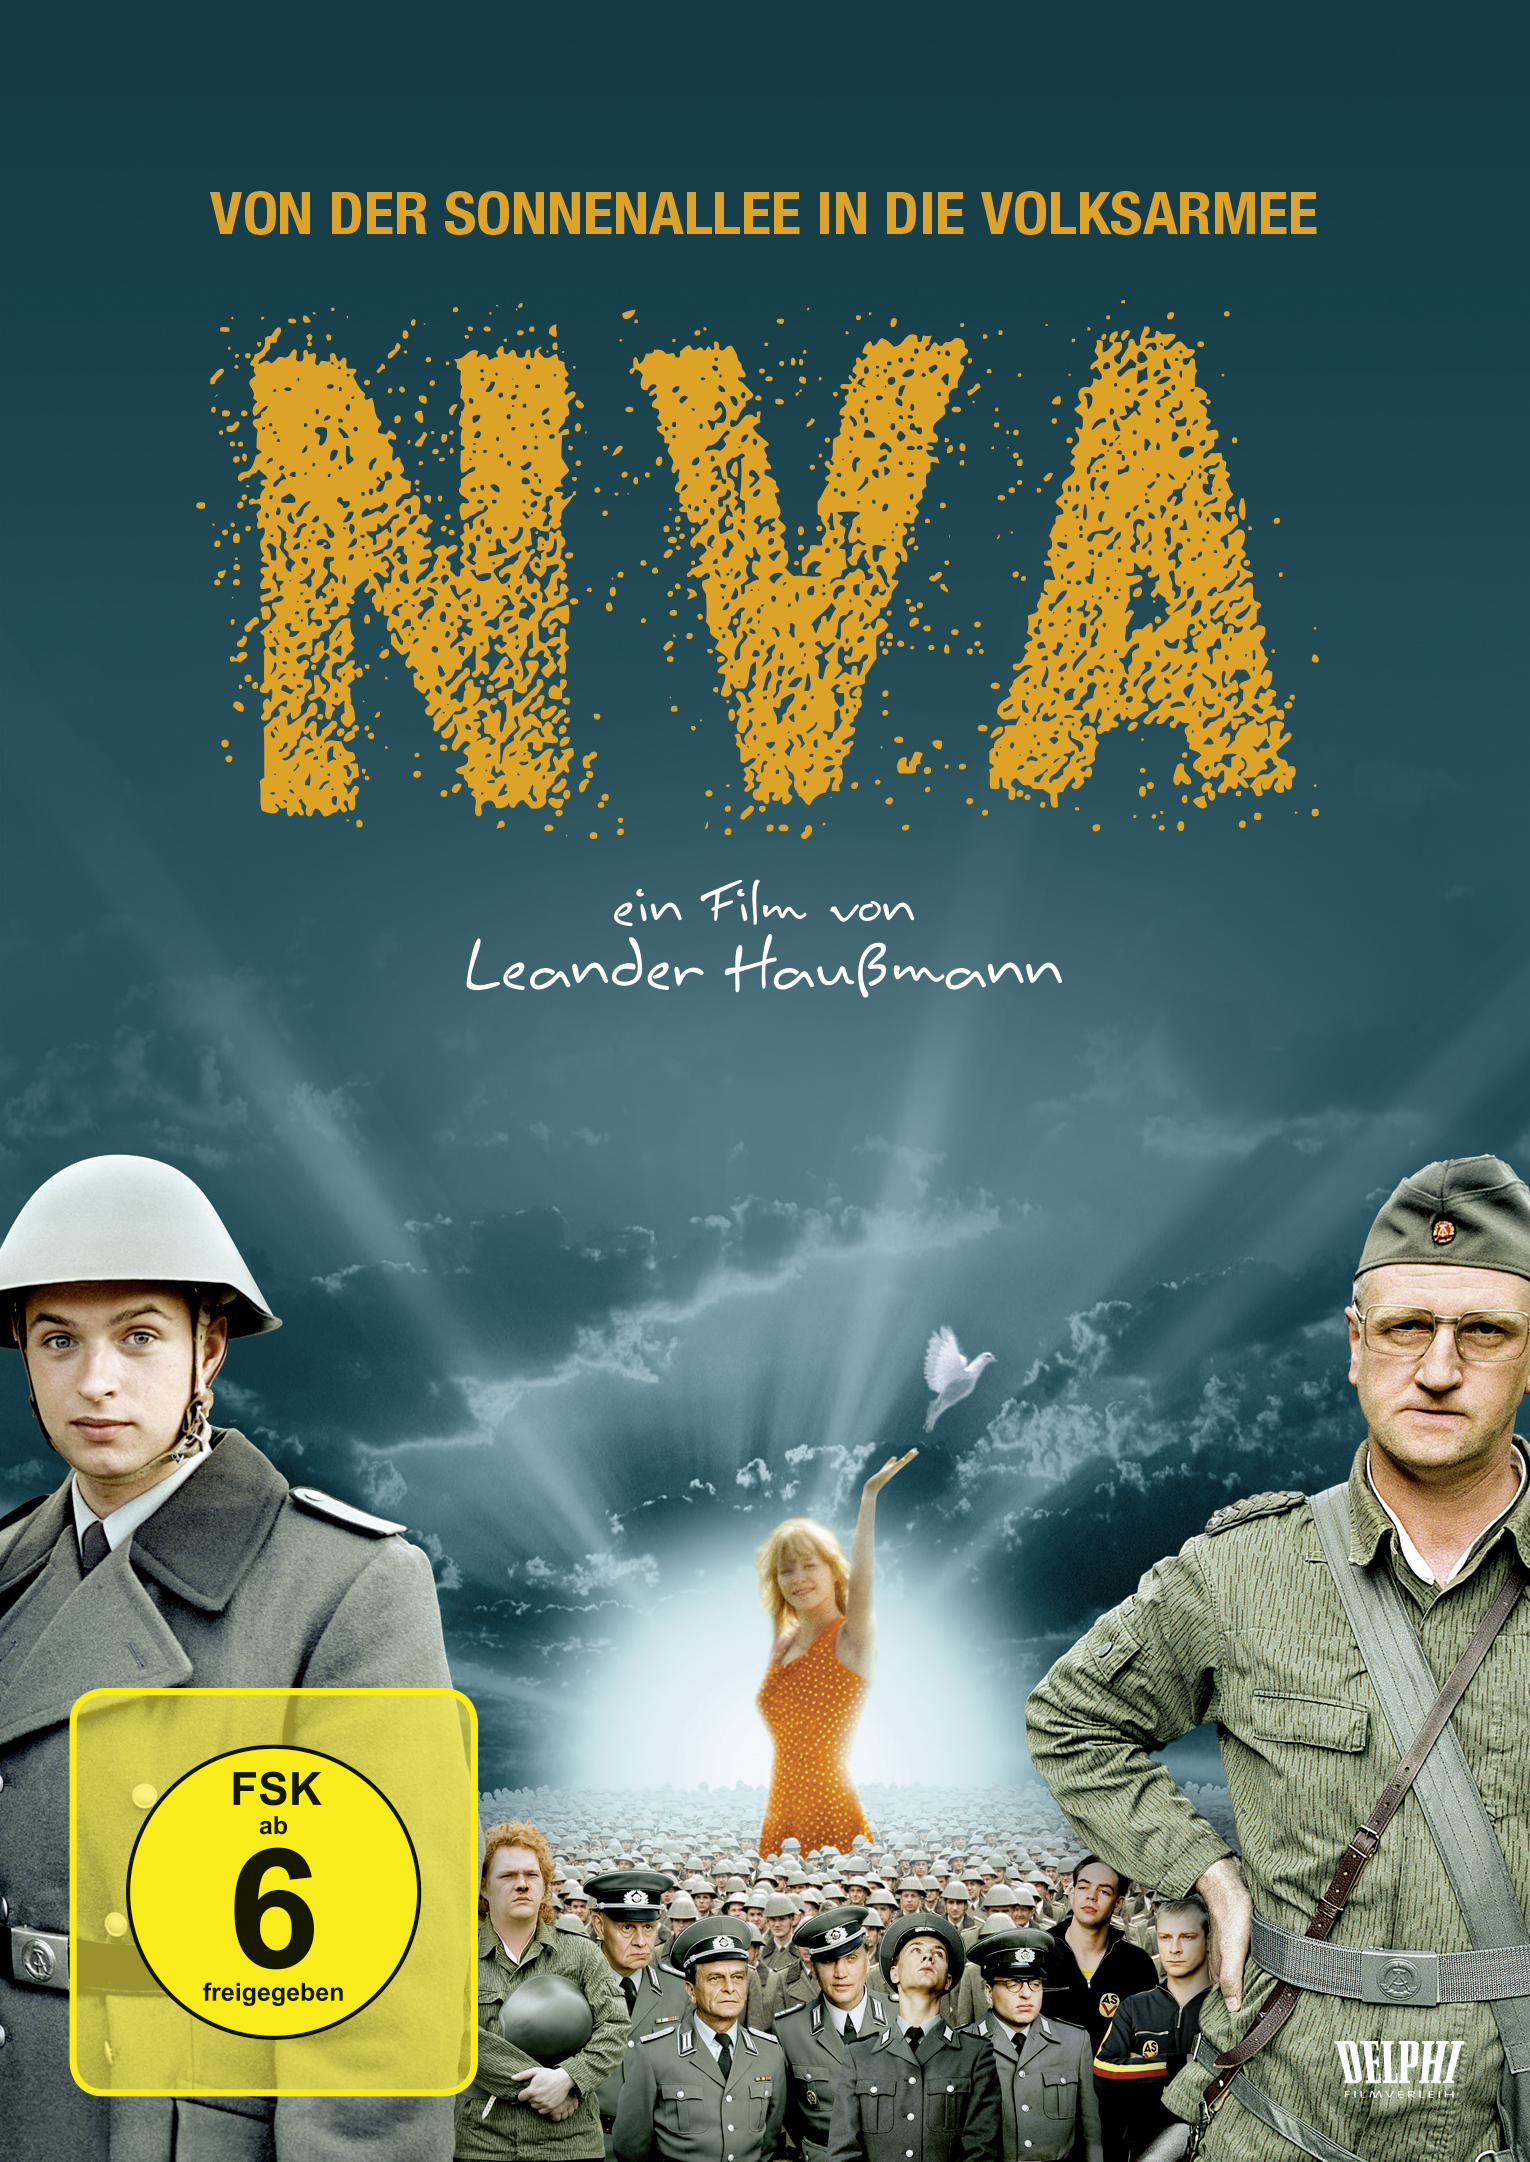 NVA DVD